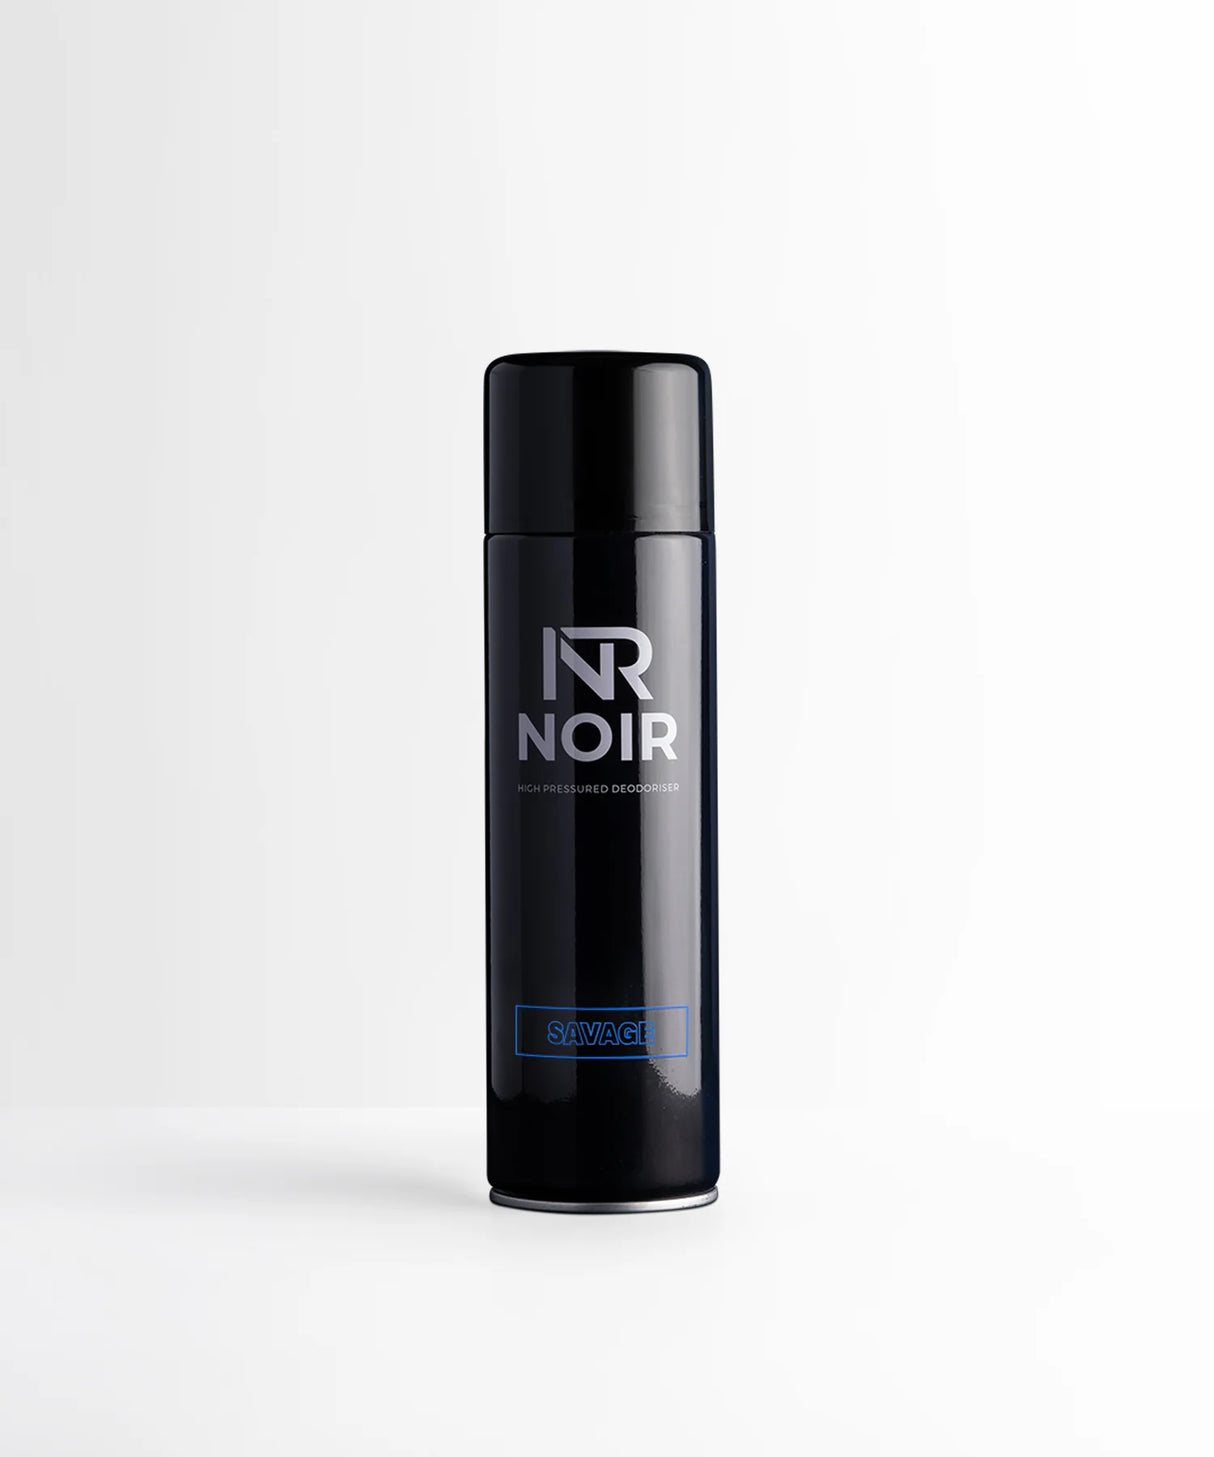 NOIR Savage Luxury Air Freshener 500ml - Inspired by Dior Sauvage